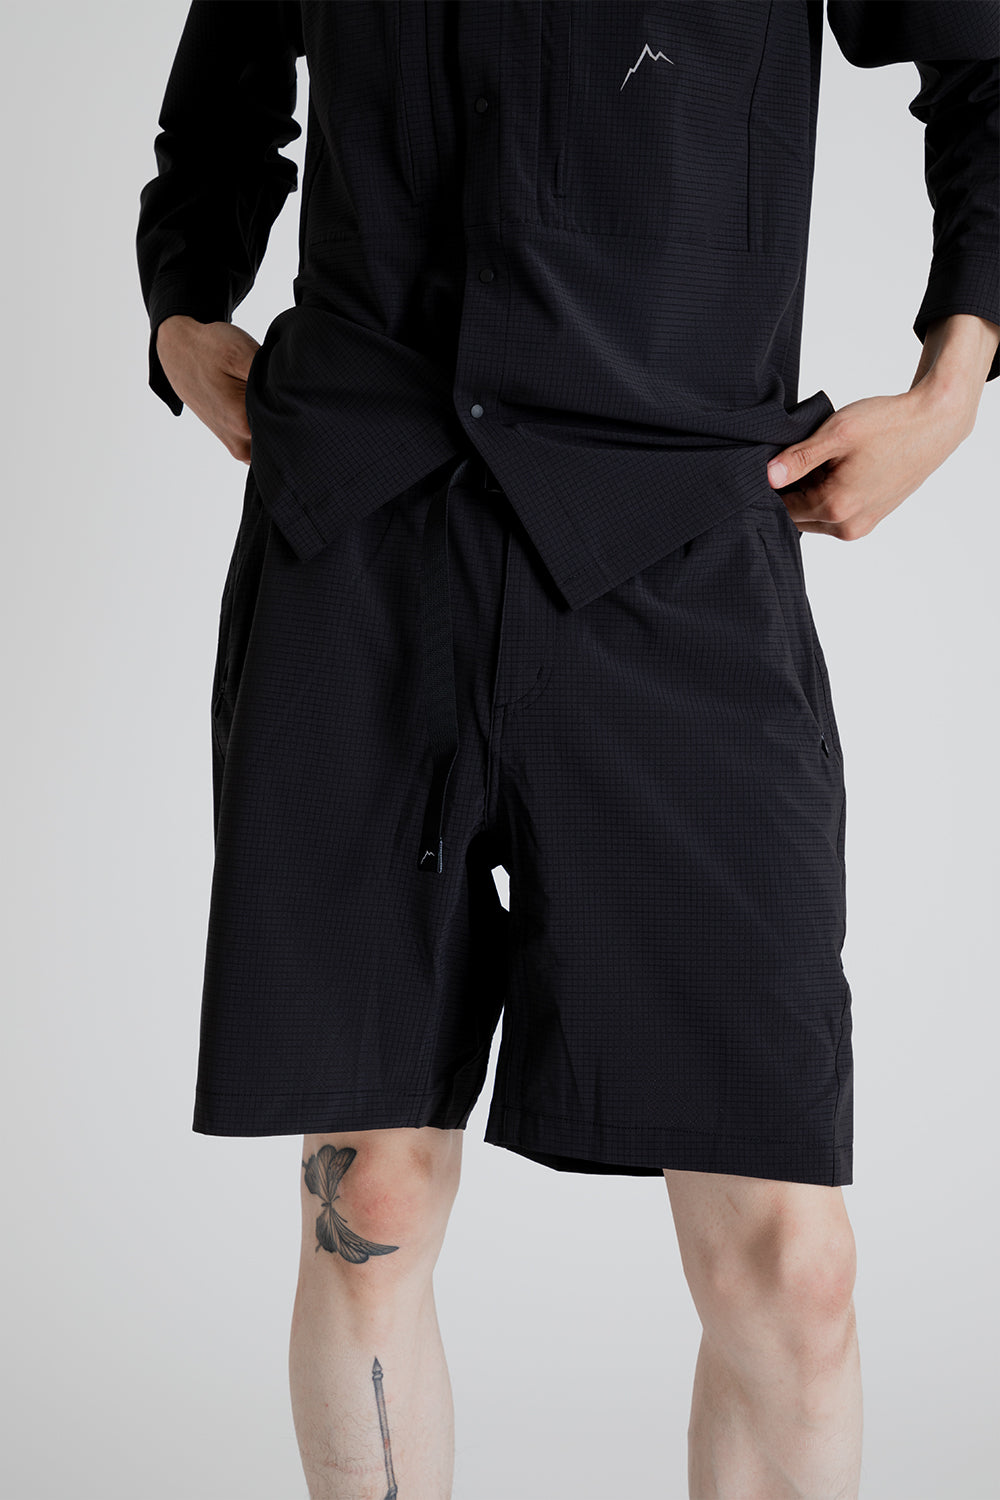 CAYL Flow Shorts in Black